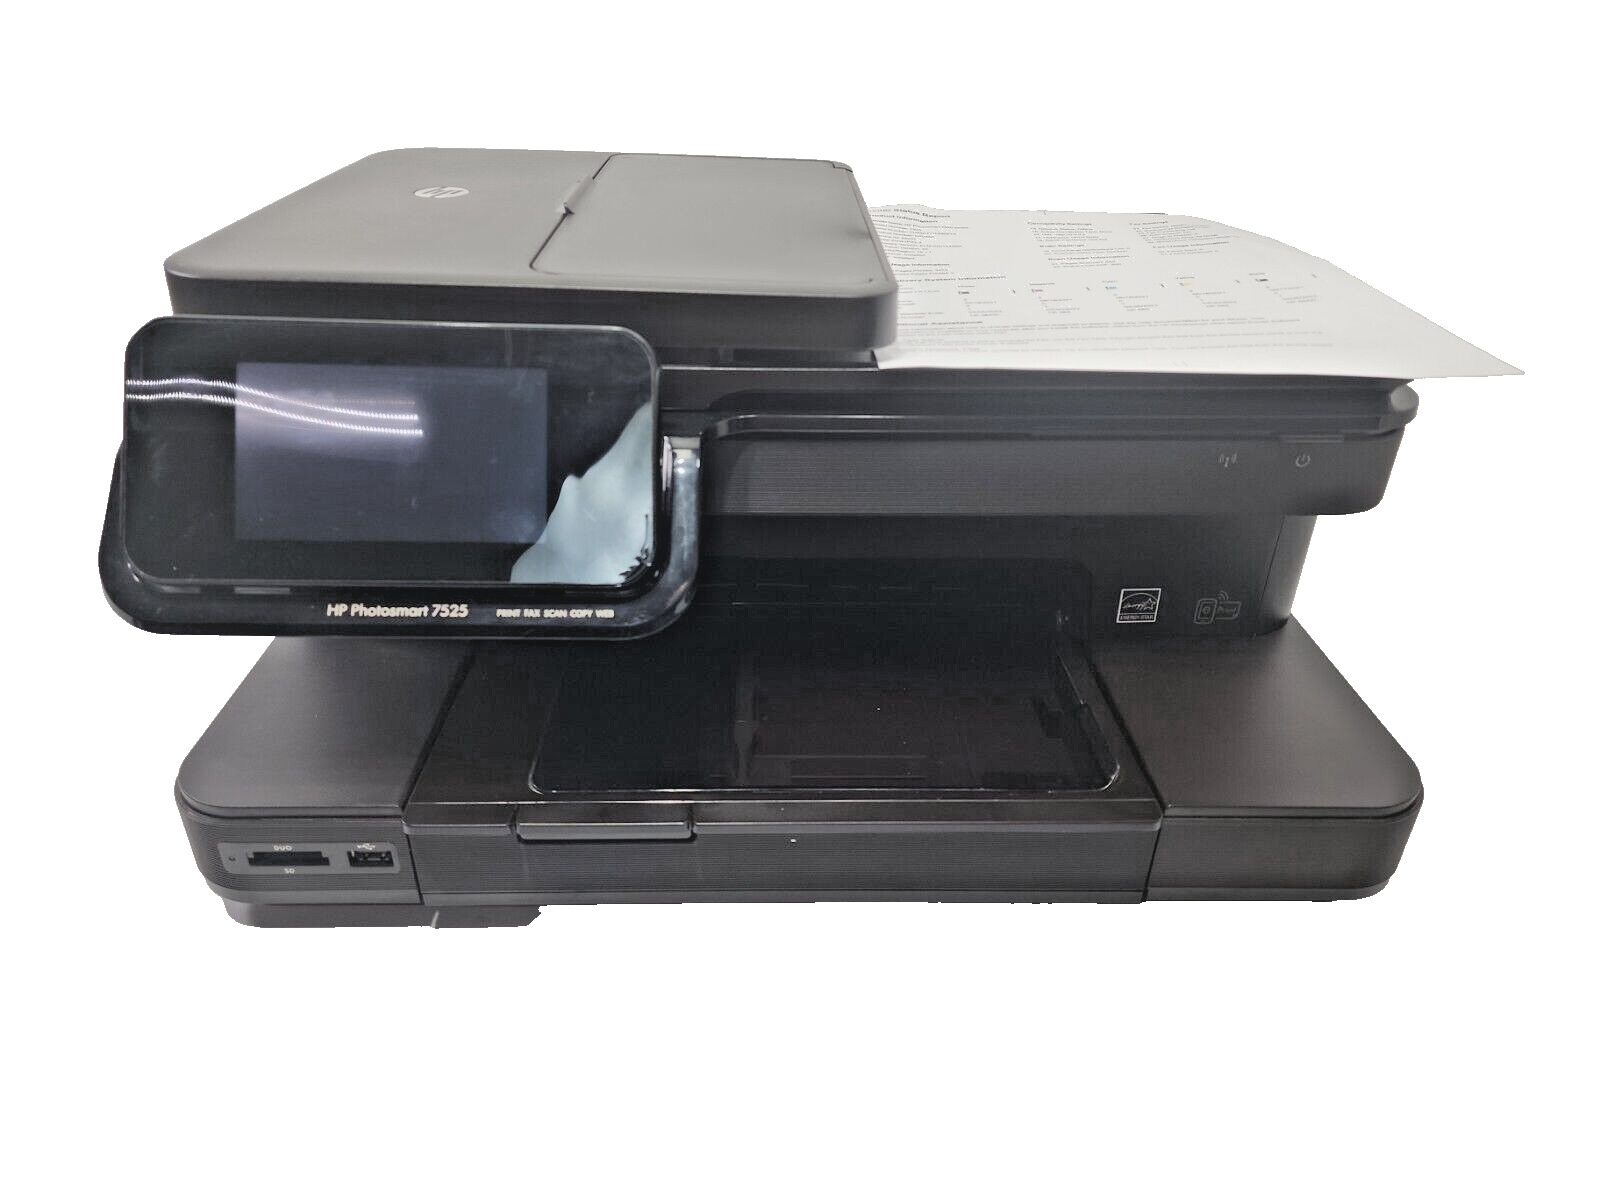 HP Photosmart 7525 All-In-One Inkjet Photo Printer Scanner Copier